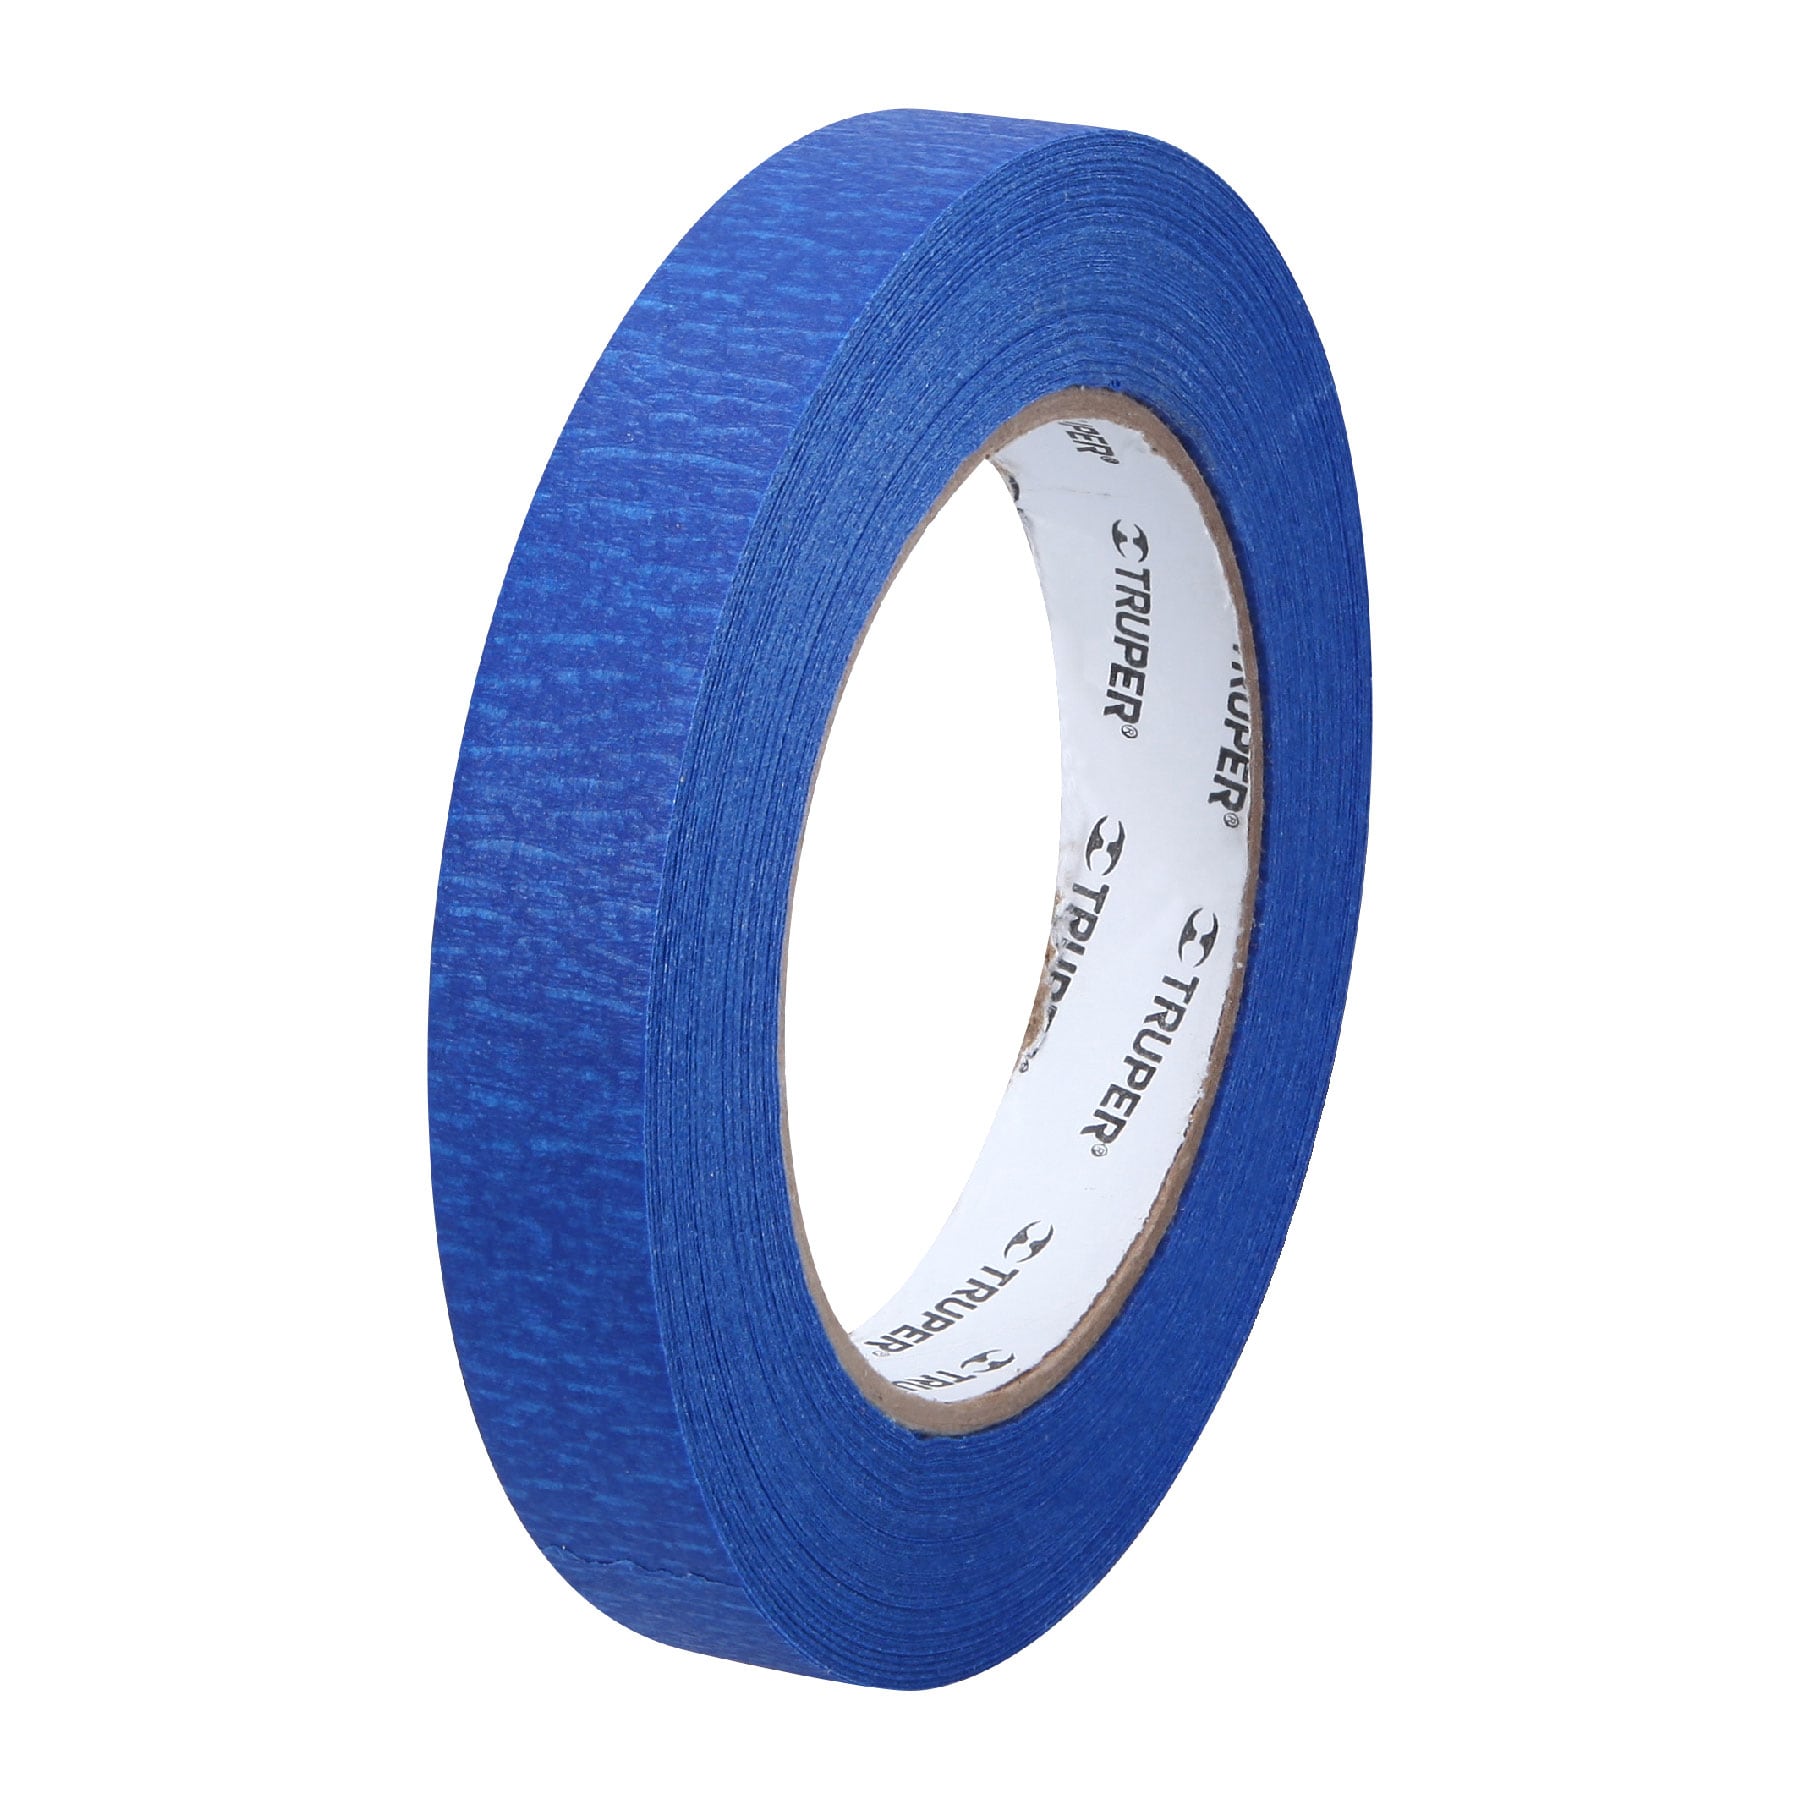 Cinta masking tape azul de 3/4 x 50 m Truper